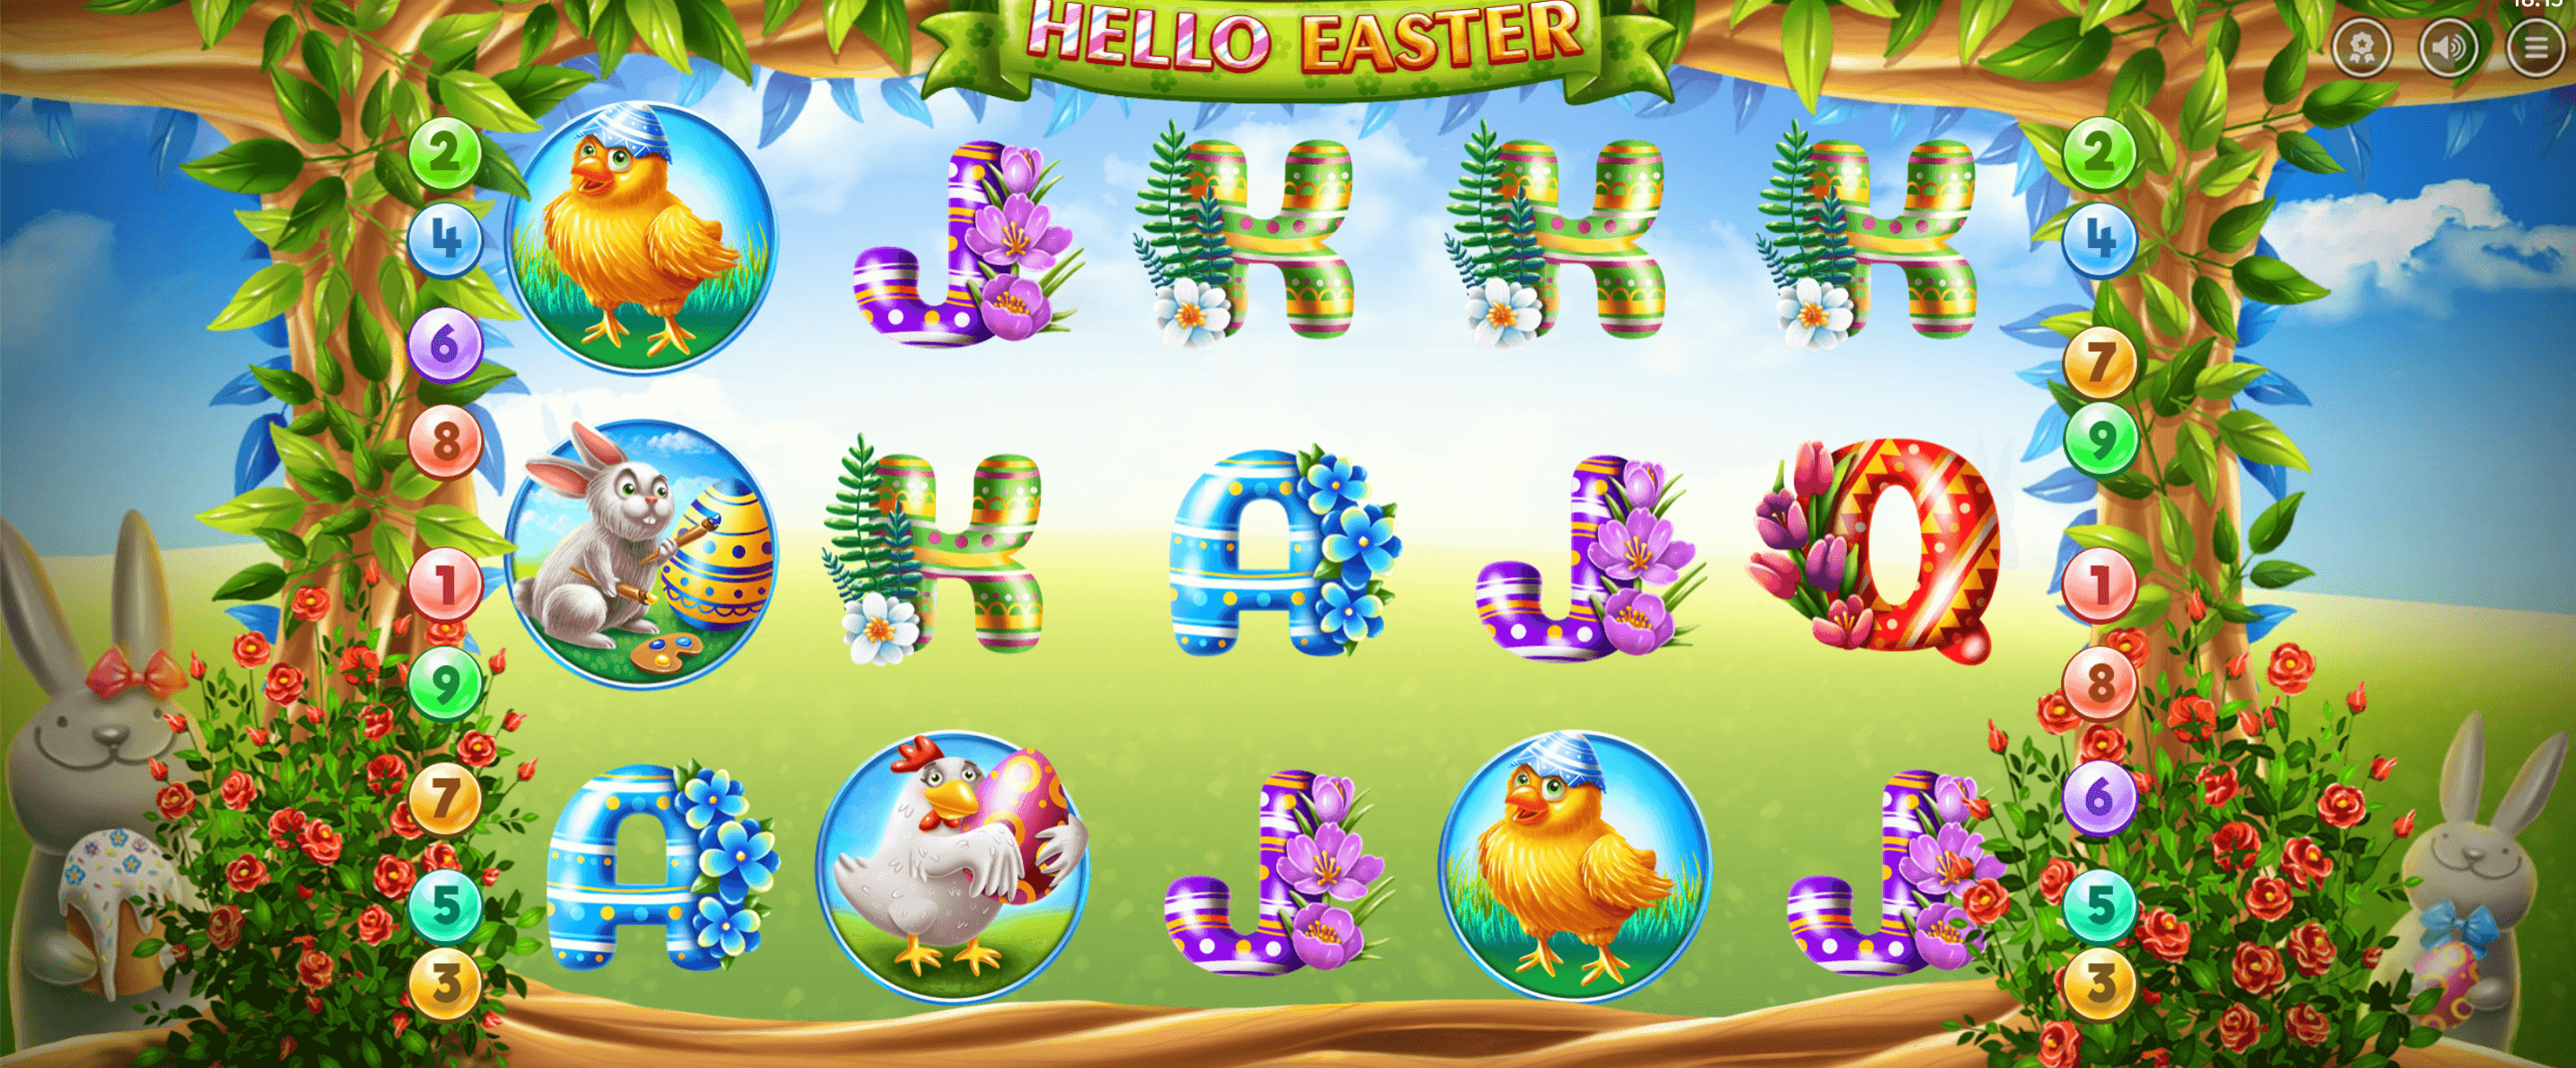 Hello Easter slot para jugar en Pascua